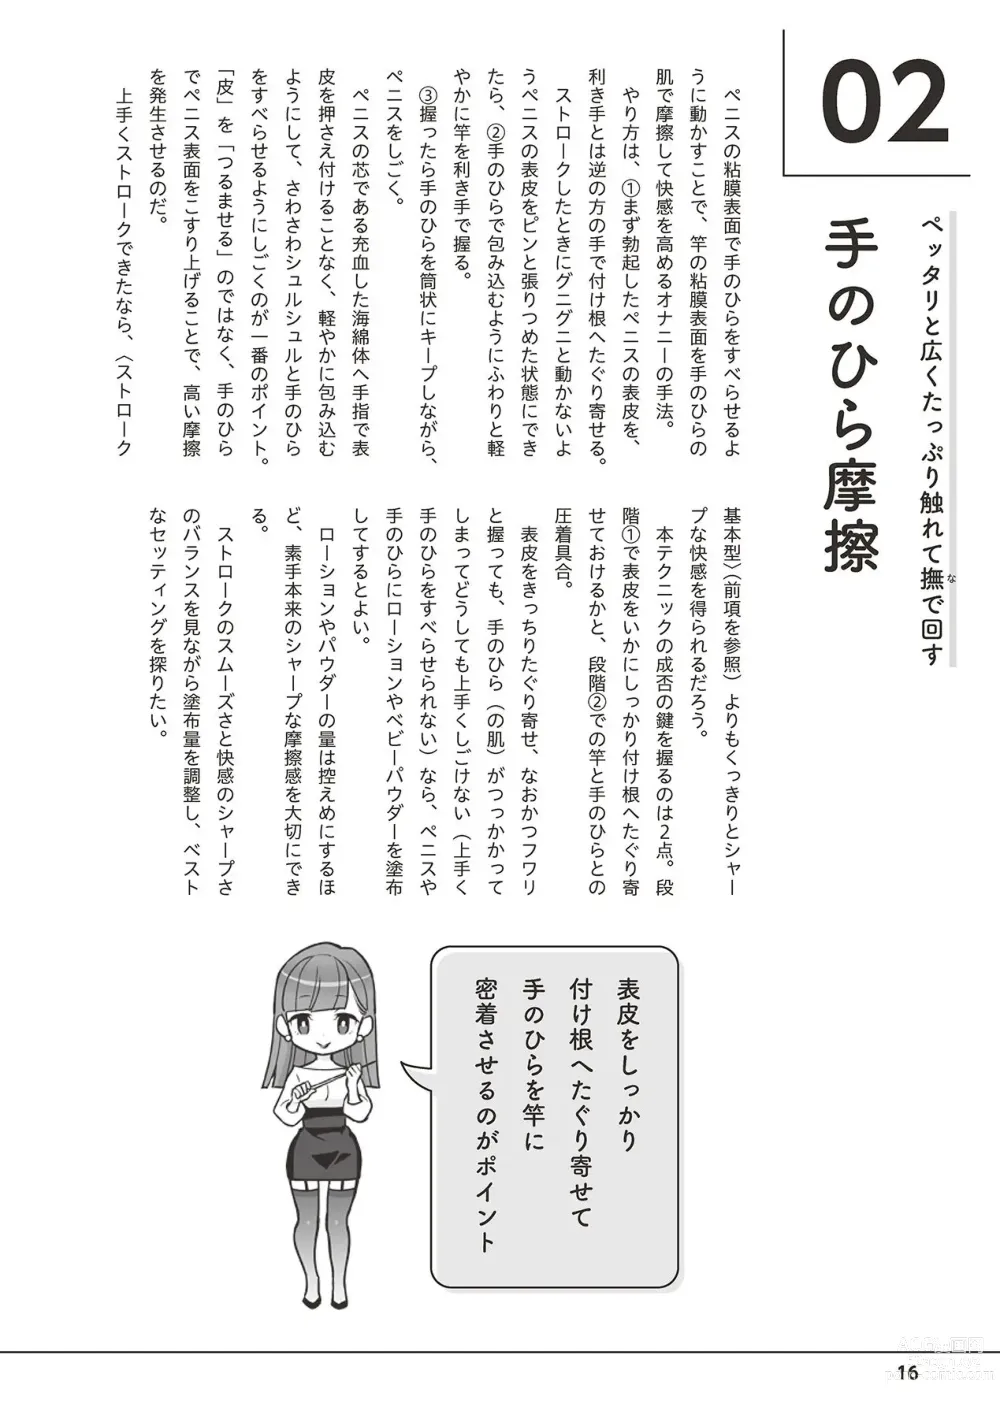 Page 18 of manga Otoko no Jii Onanie Kanzen Manual Illustration Han...... Onanie Play